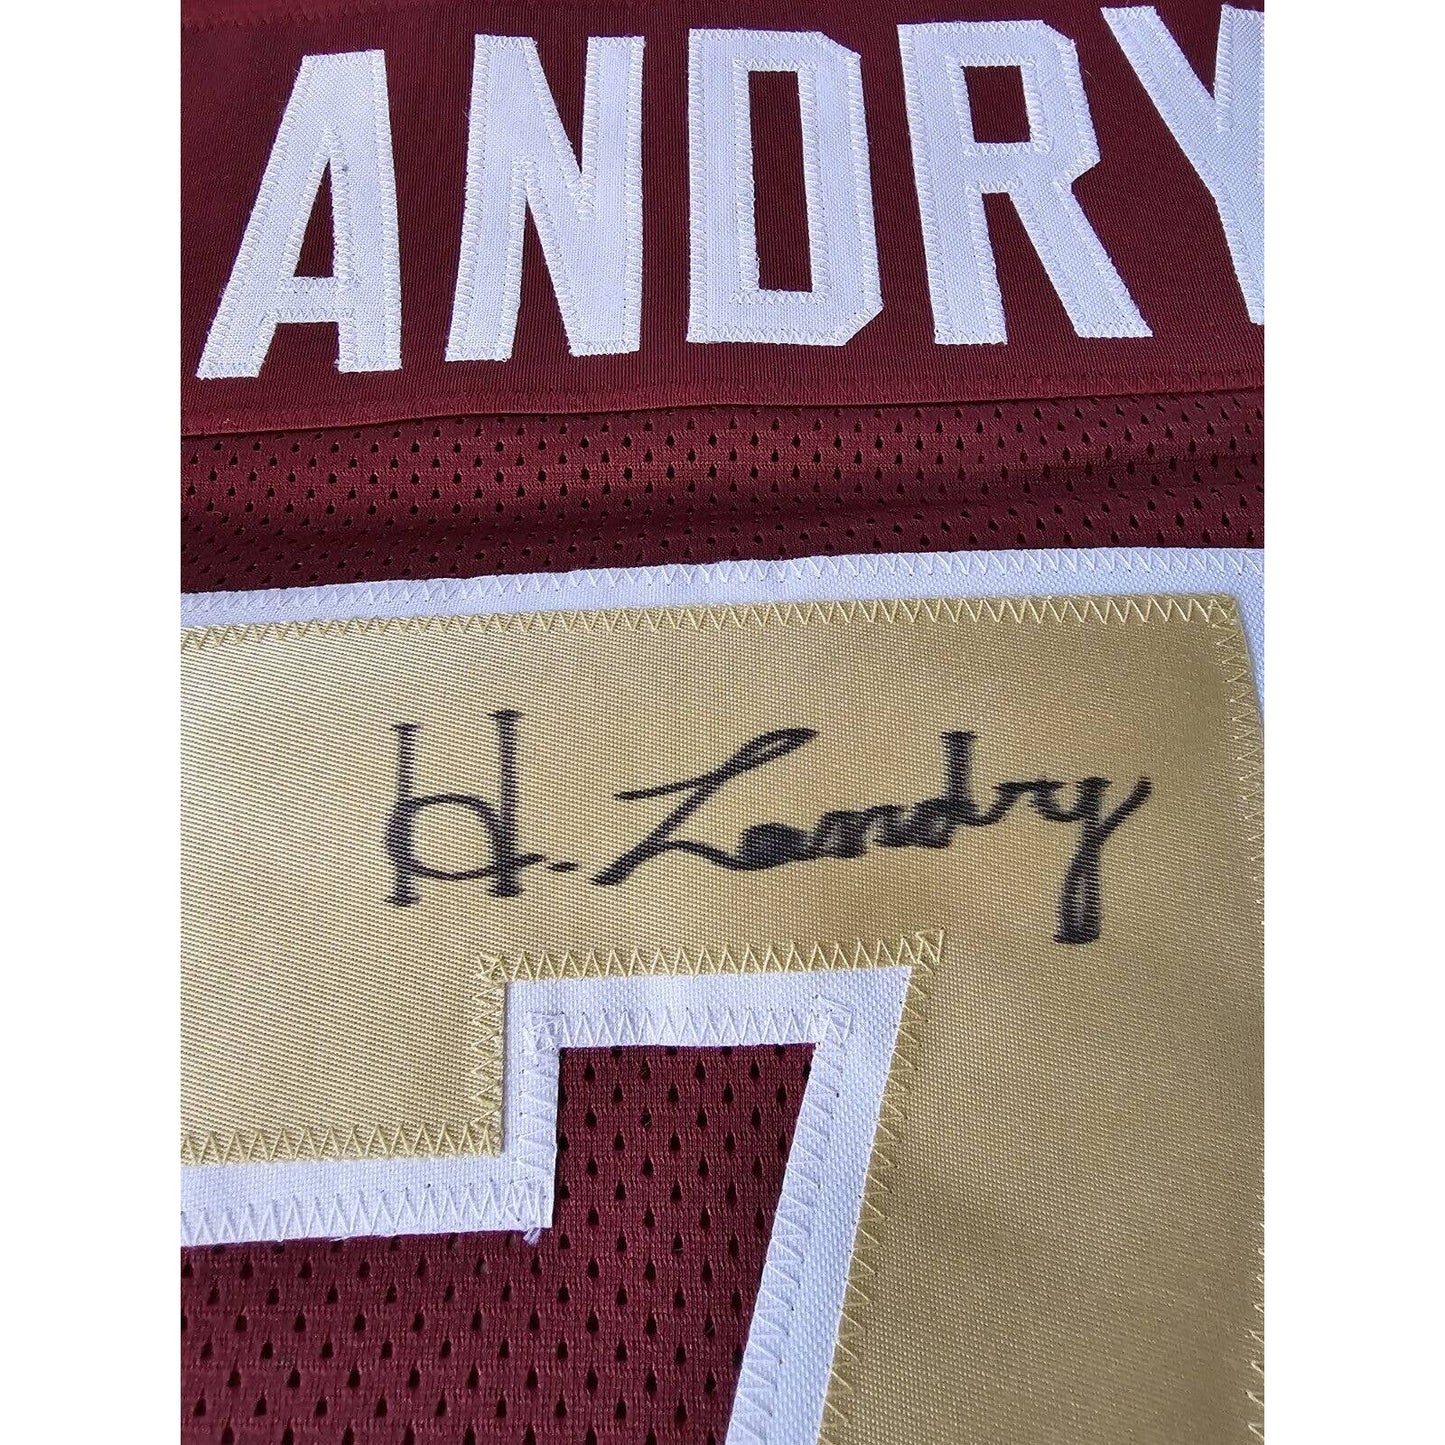 Harold Landry Autographed/Signed Jersey JSA COA Boston College Eagles